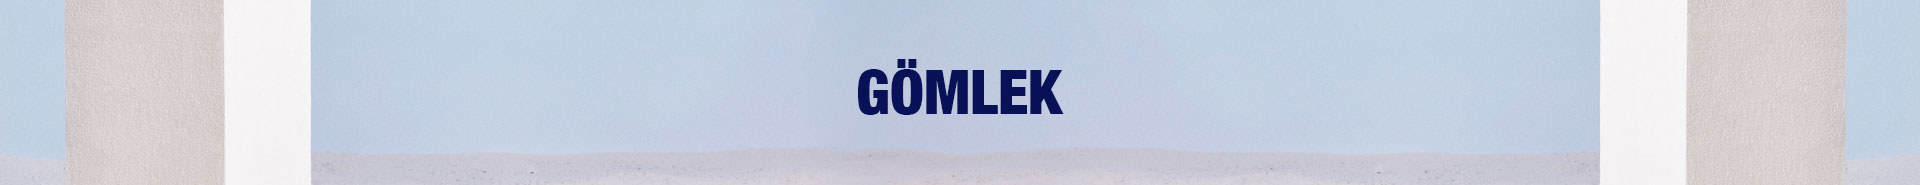 gomlek_1920x185.jpg (28 KB)